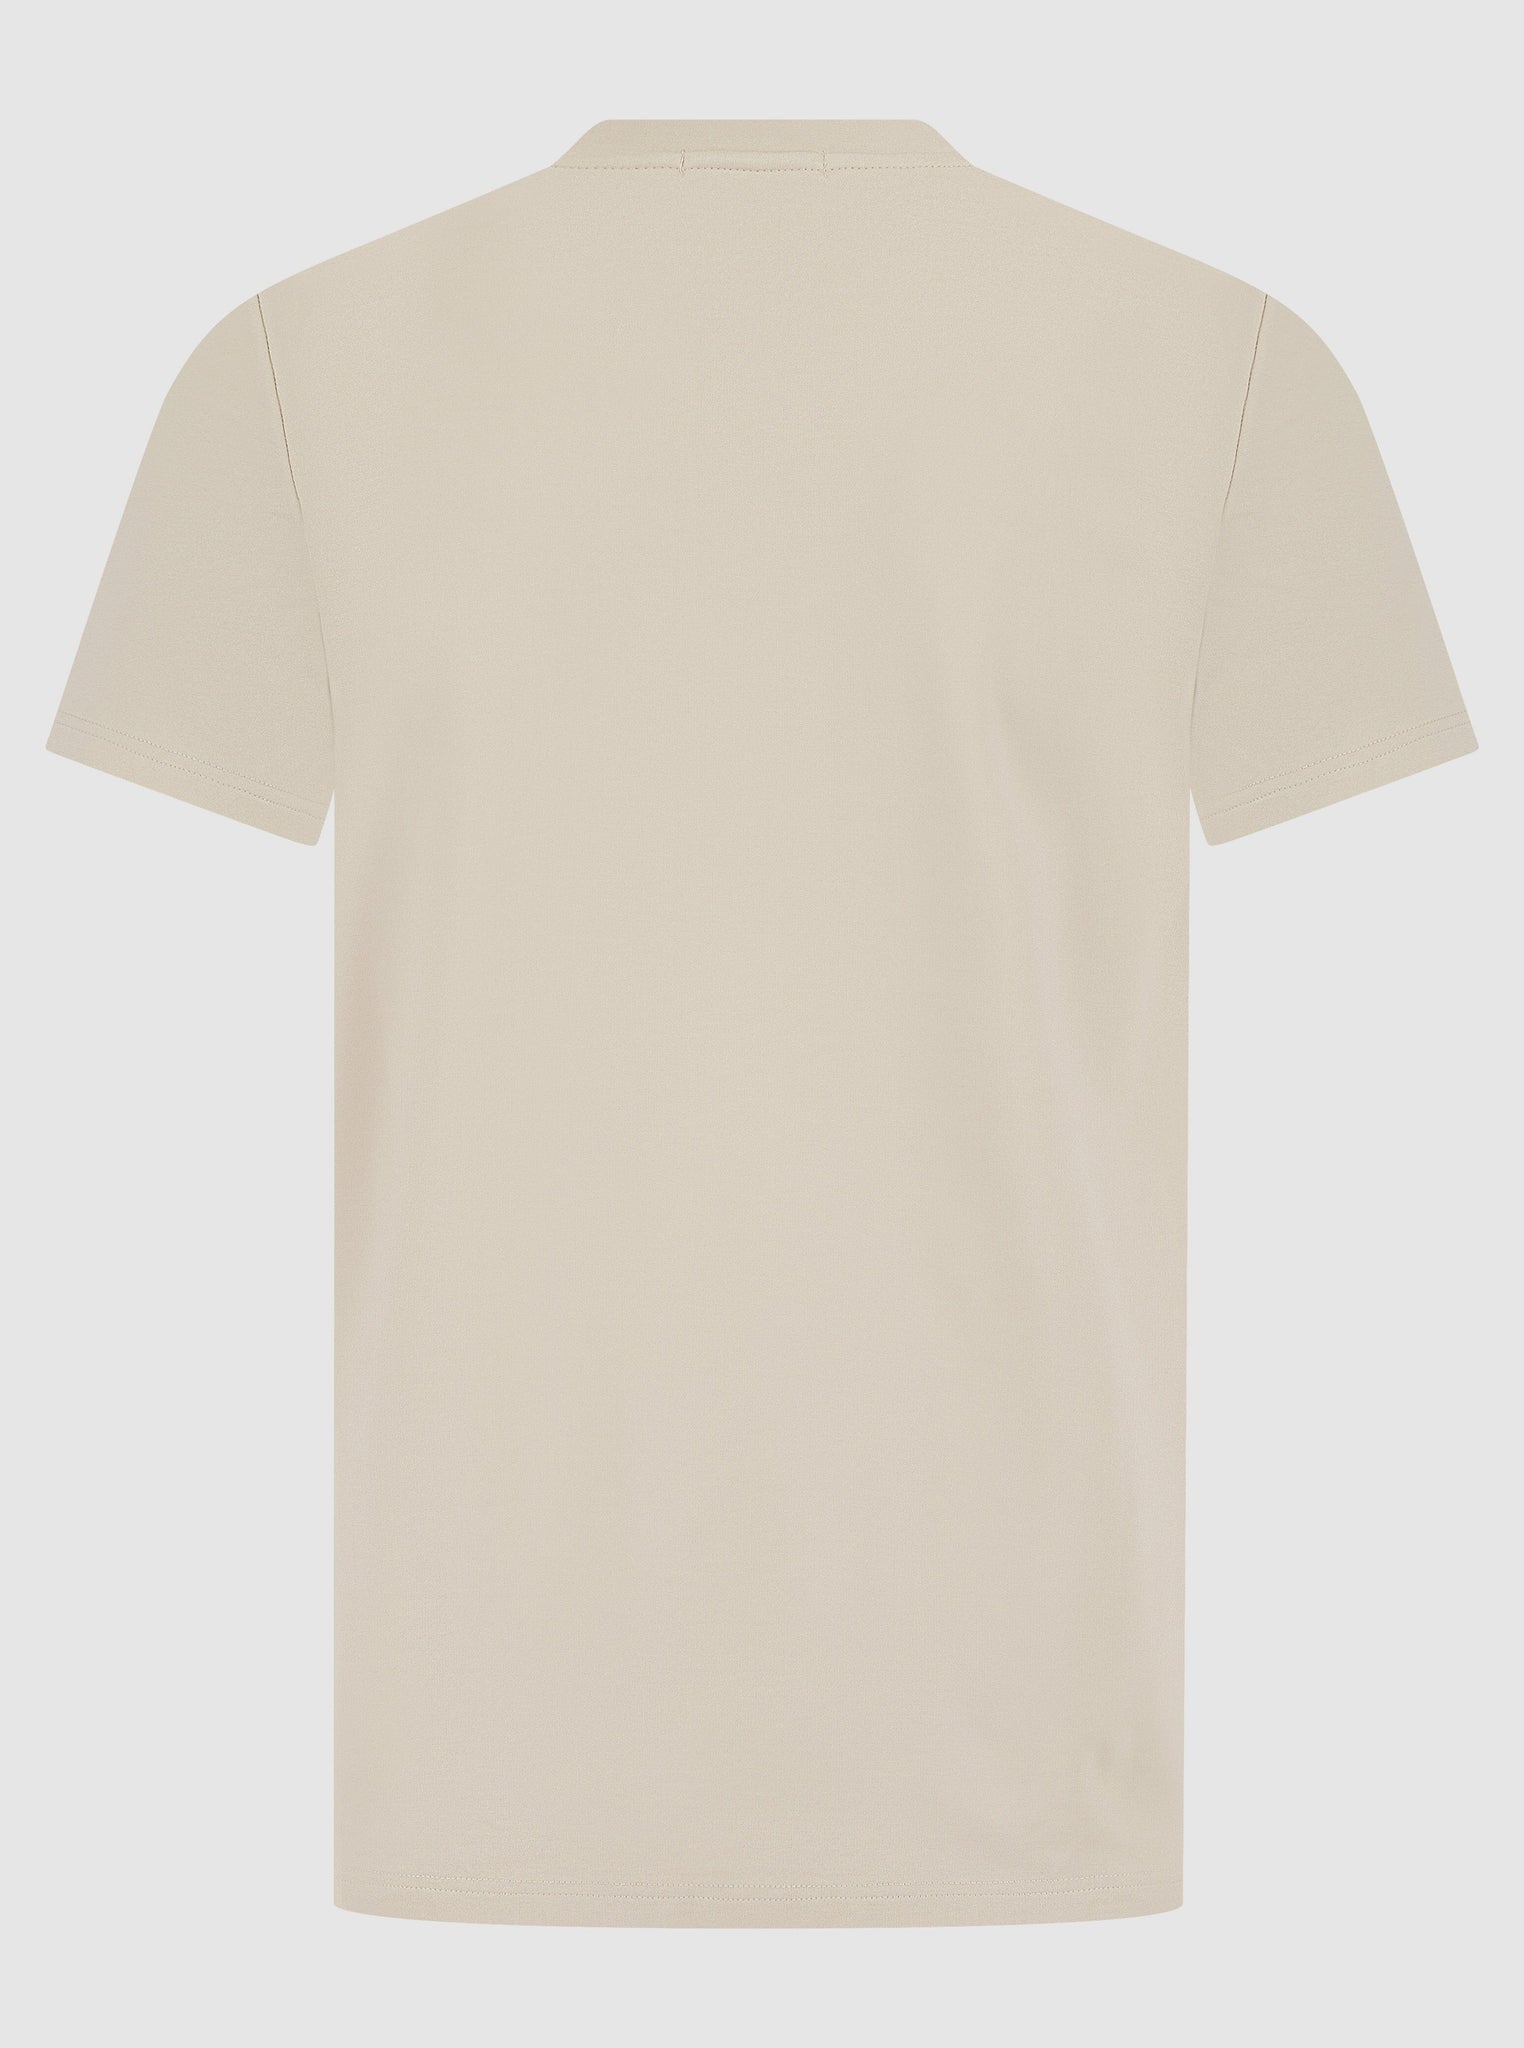 Premium Plain T-Shirt TAUPE